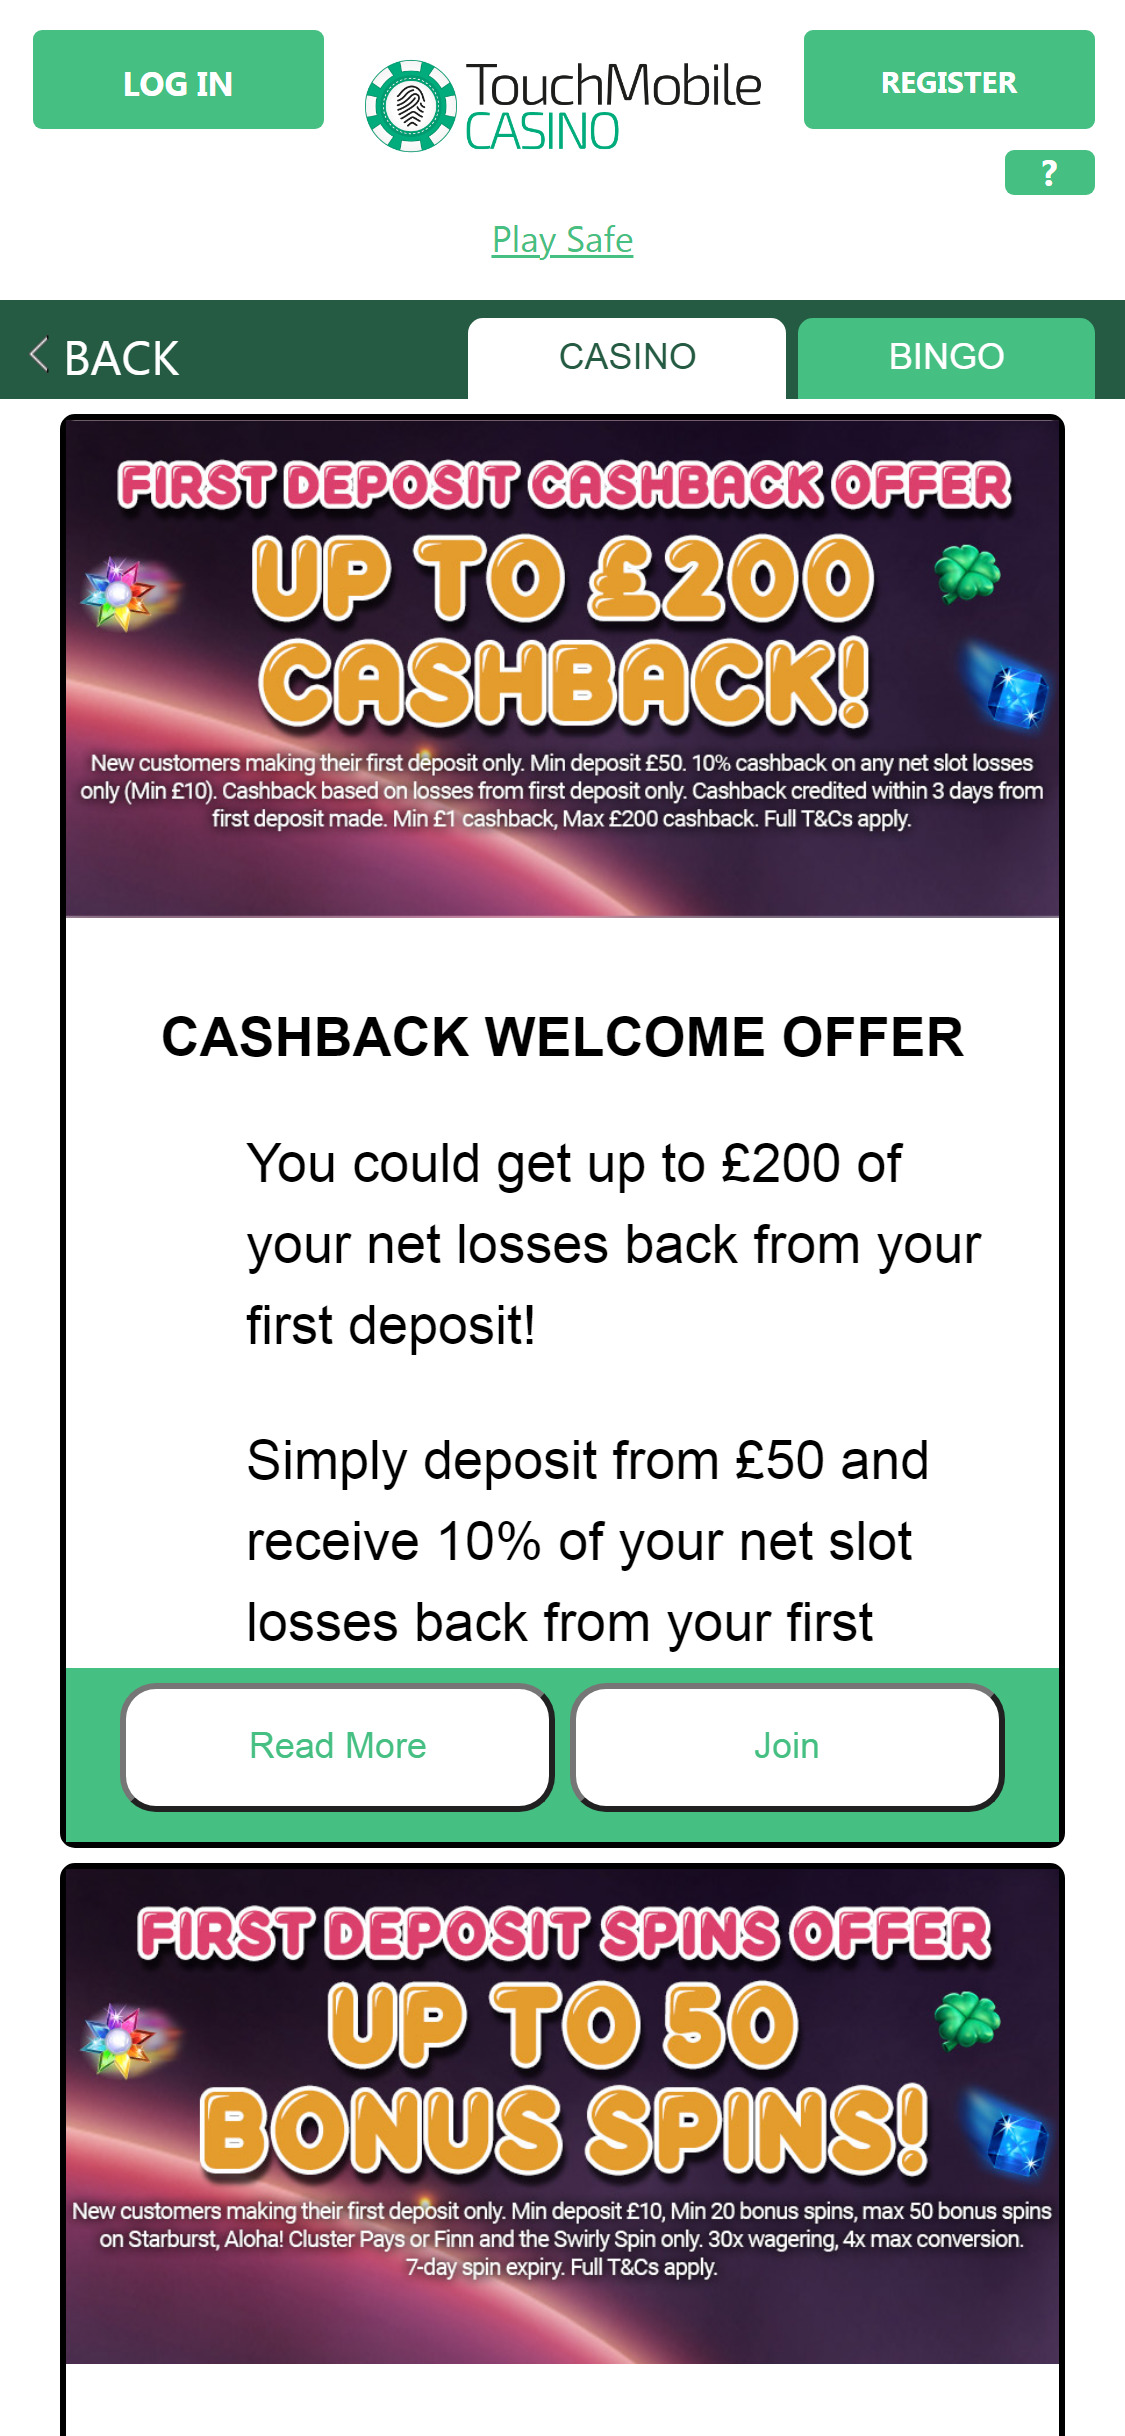 Touch Mobile Casino Mobile No Deposit Bonus Review